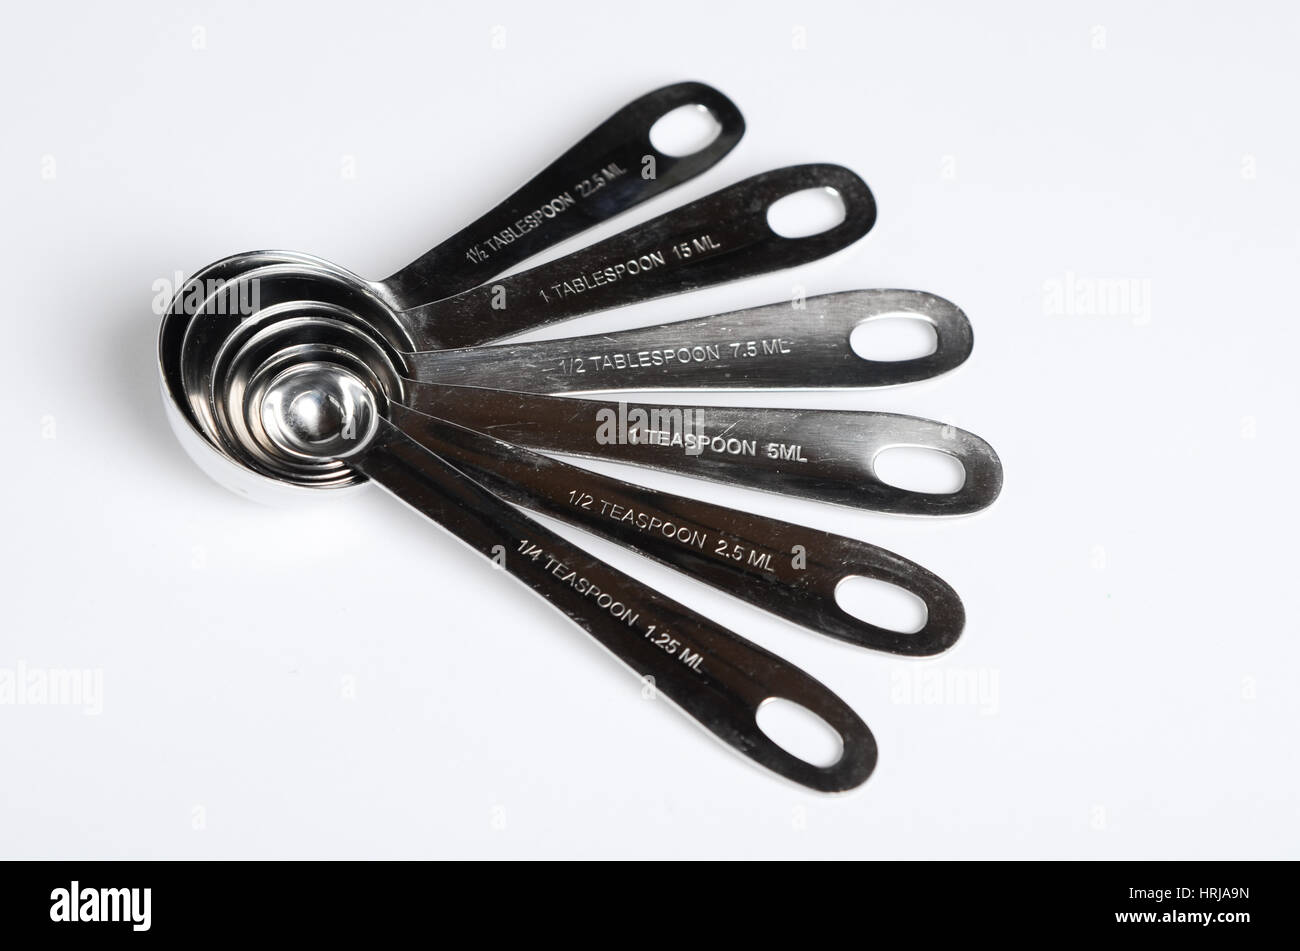 AllSpice Stainless Steel Double Sided Measuring Spoon- 1/2 Teaspoon and 1/4  Teaspoon